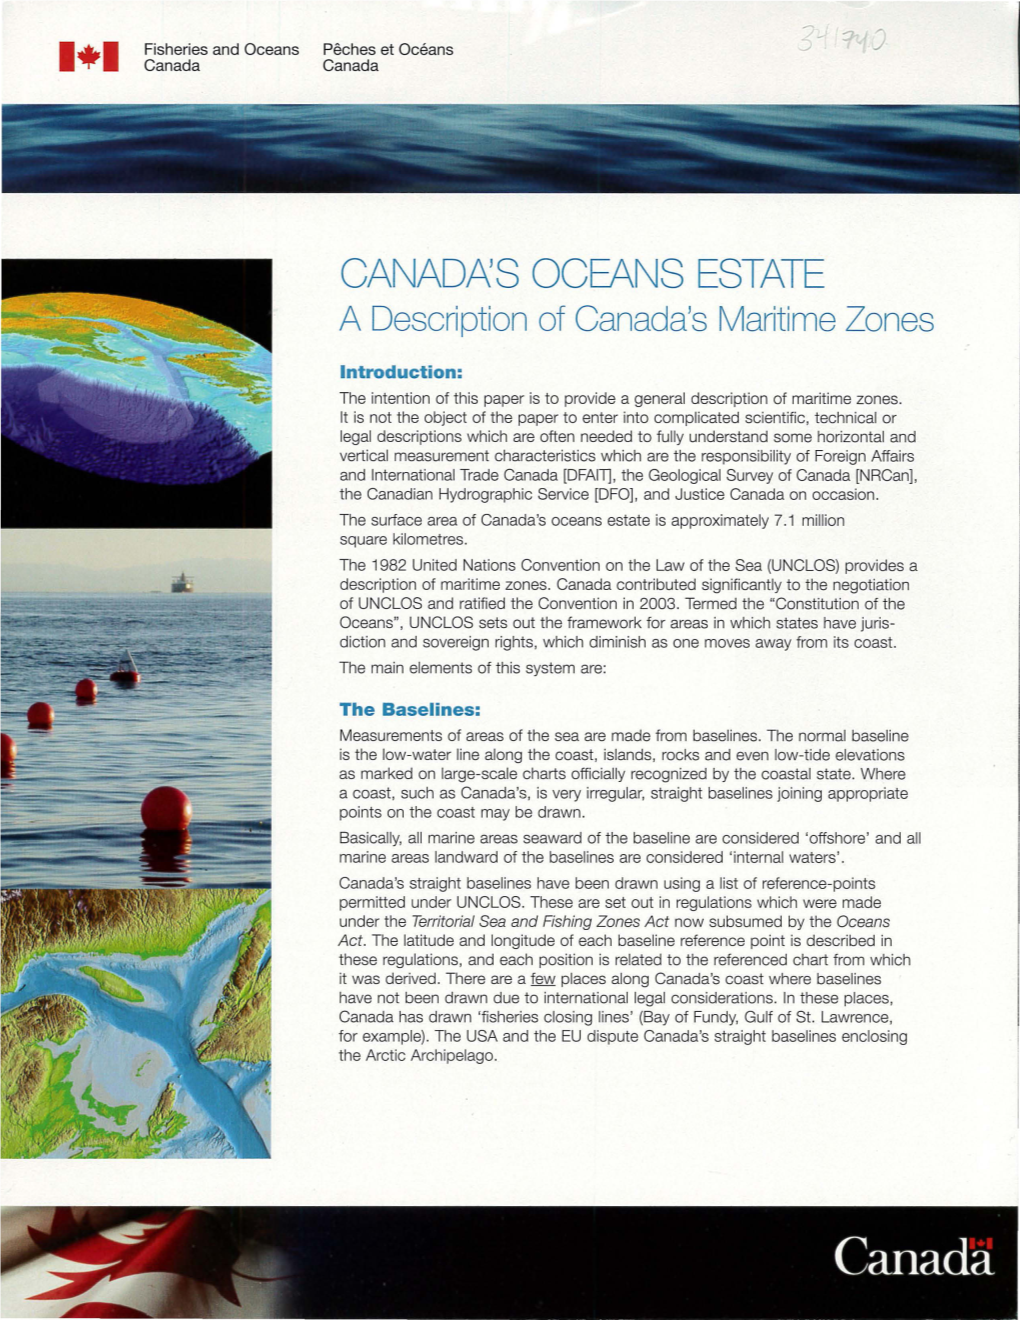 CANAD/\S OCEANS ESTATE a Description of Canada's Maritime Zones